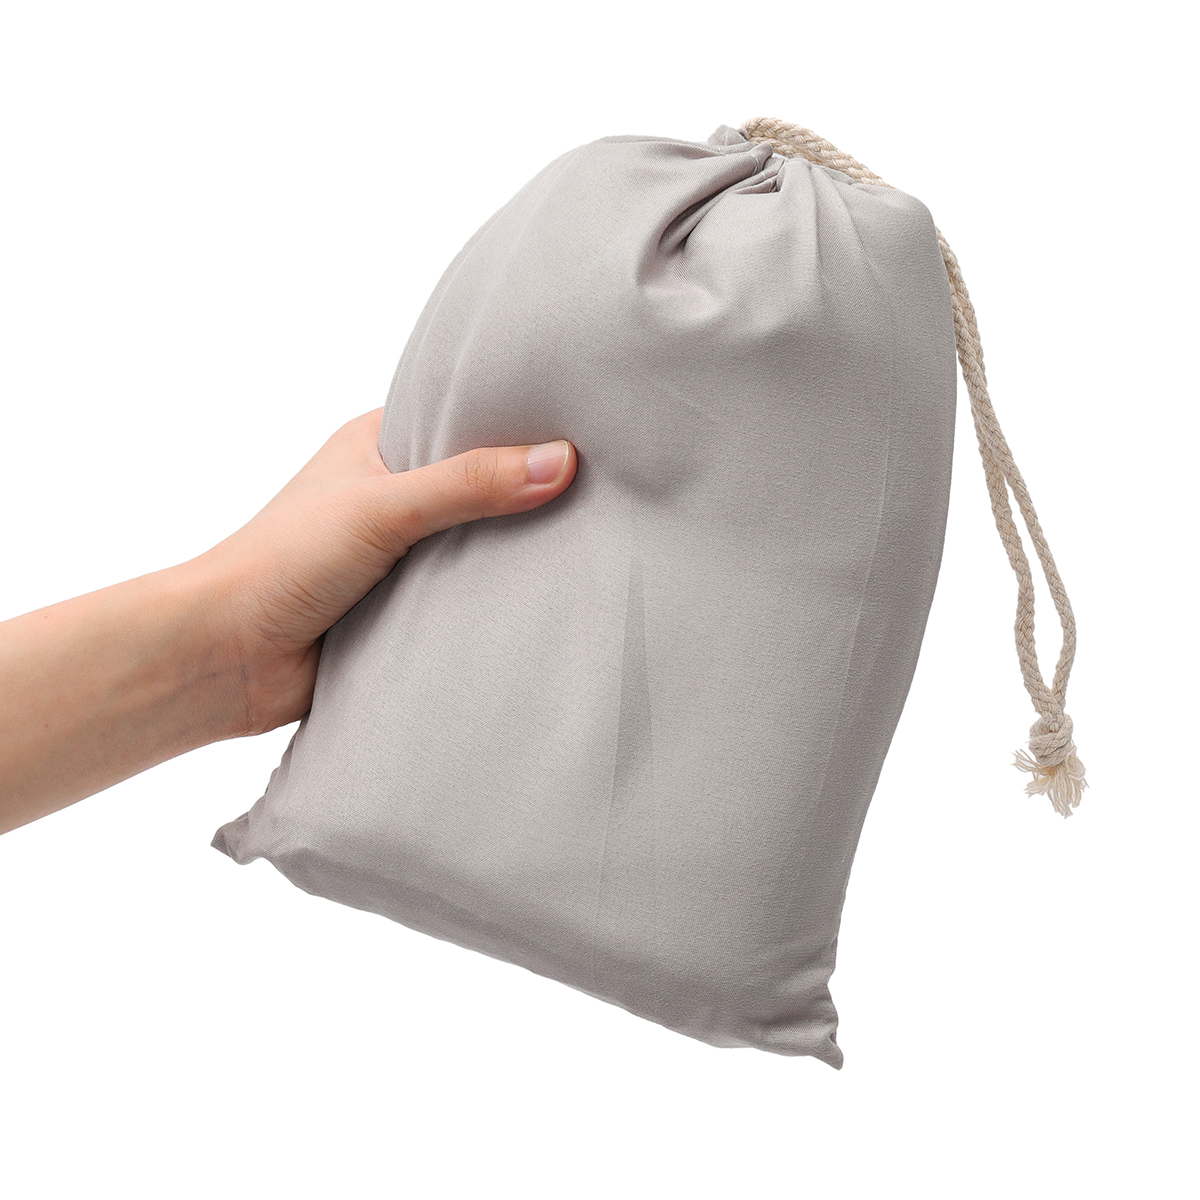 Portable-Sleeping-Bag-Cover-Ultralight-Sleep-Sheet-Outdoor-Camping-Hiking-Travel-Bag-1883995-17